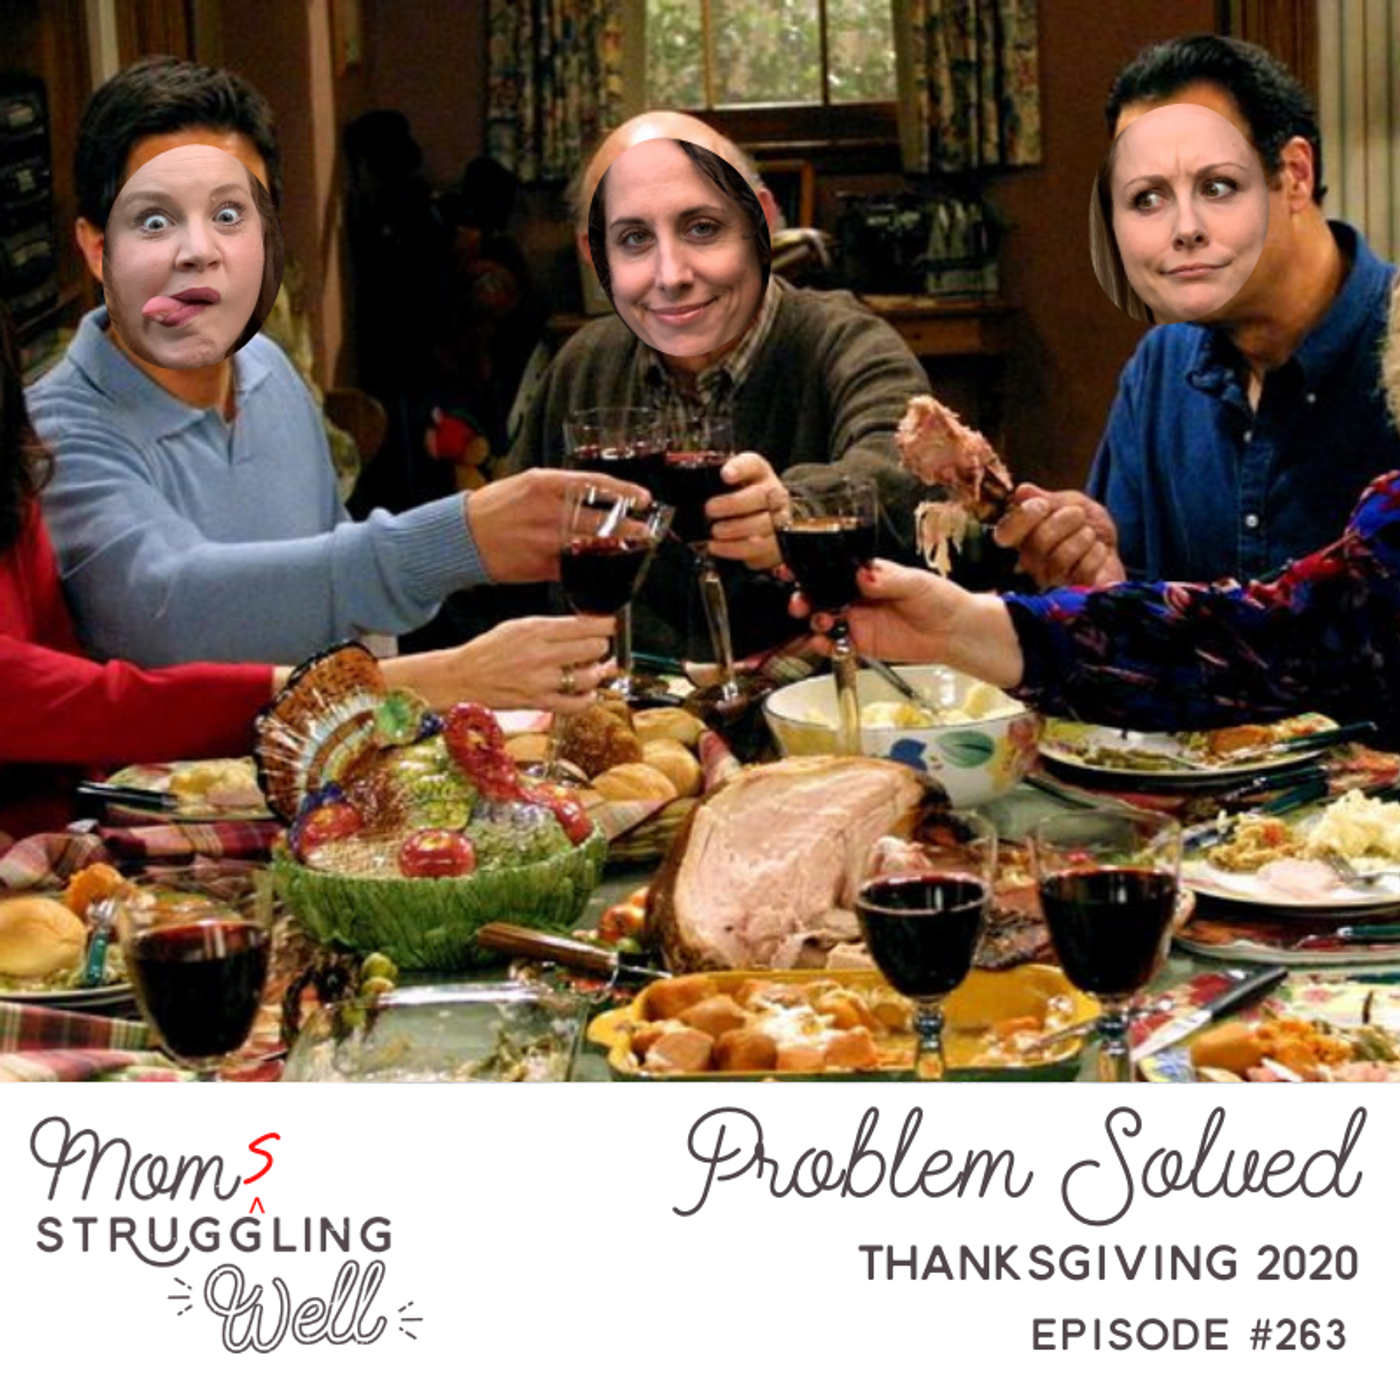 #263: Problem Solved - Thanksgiving 2020